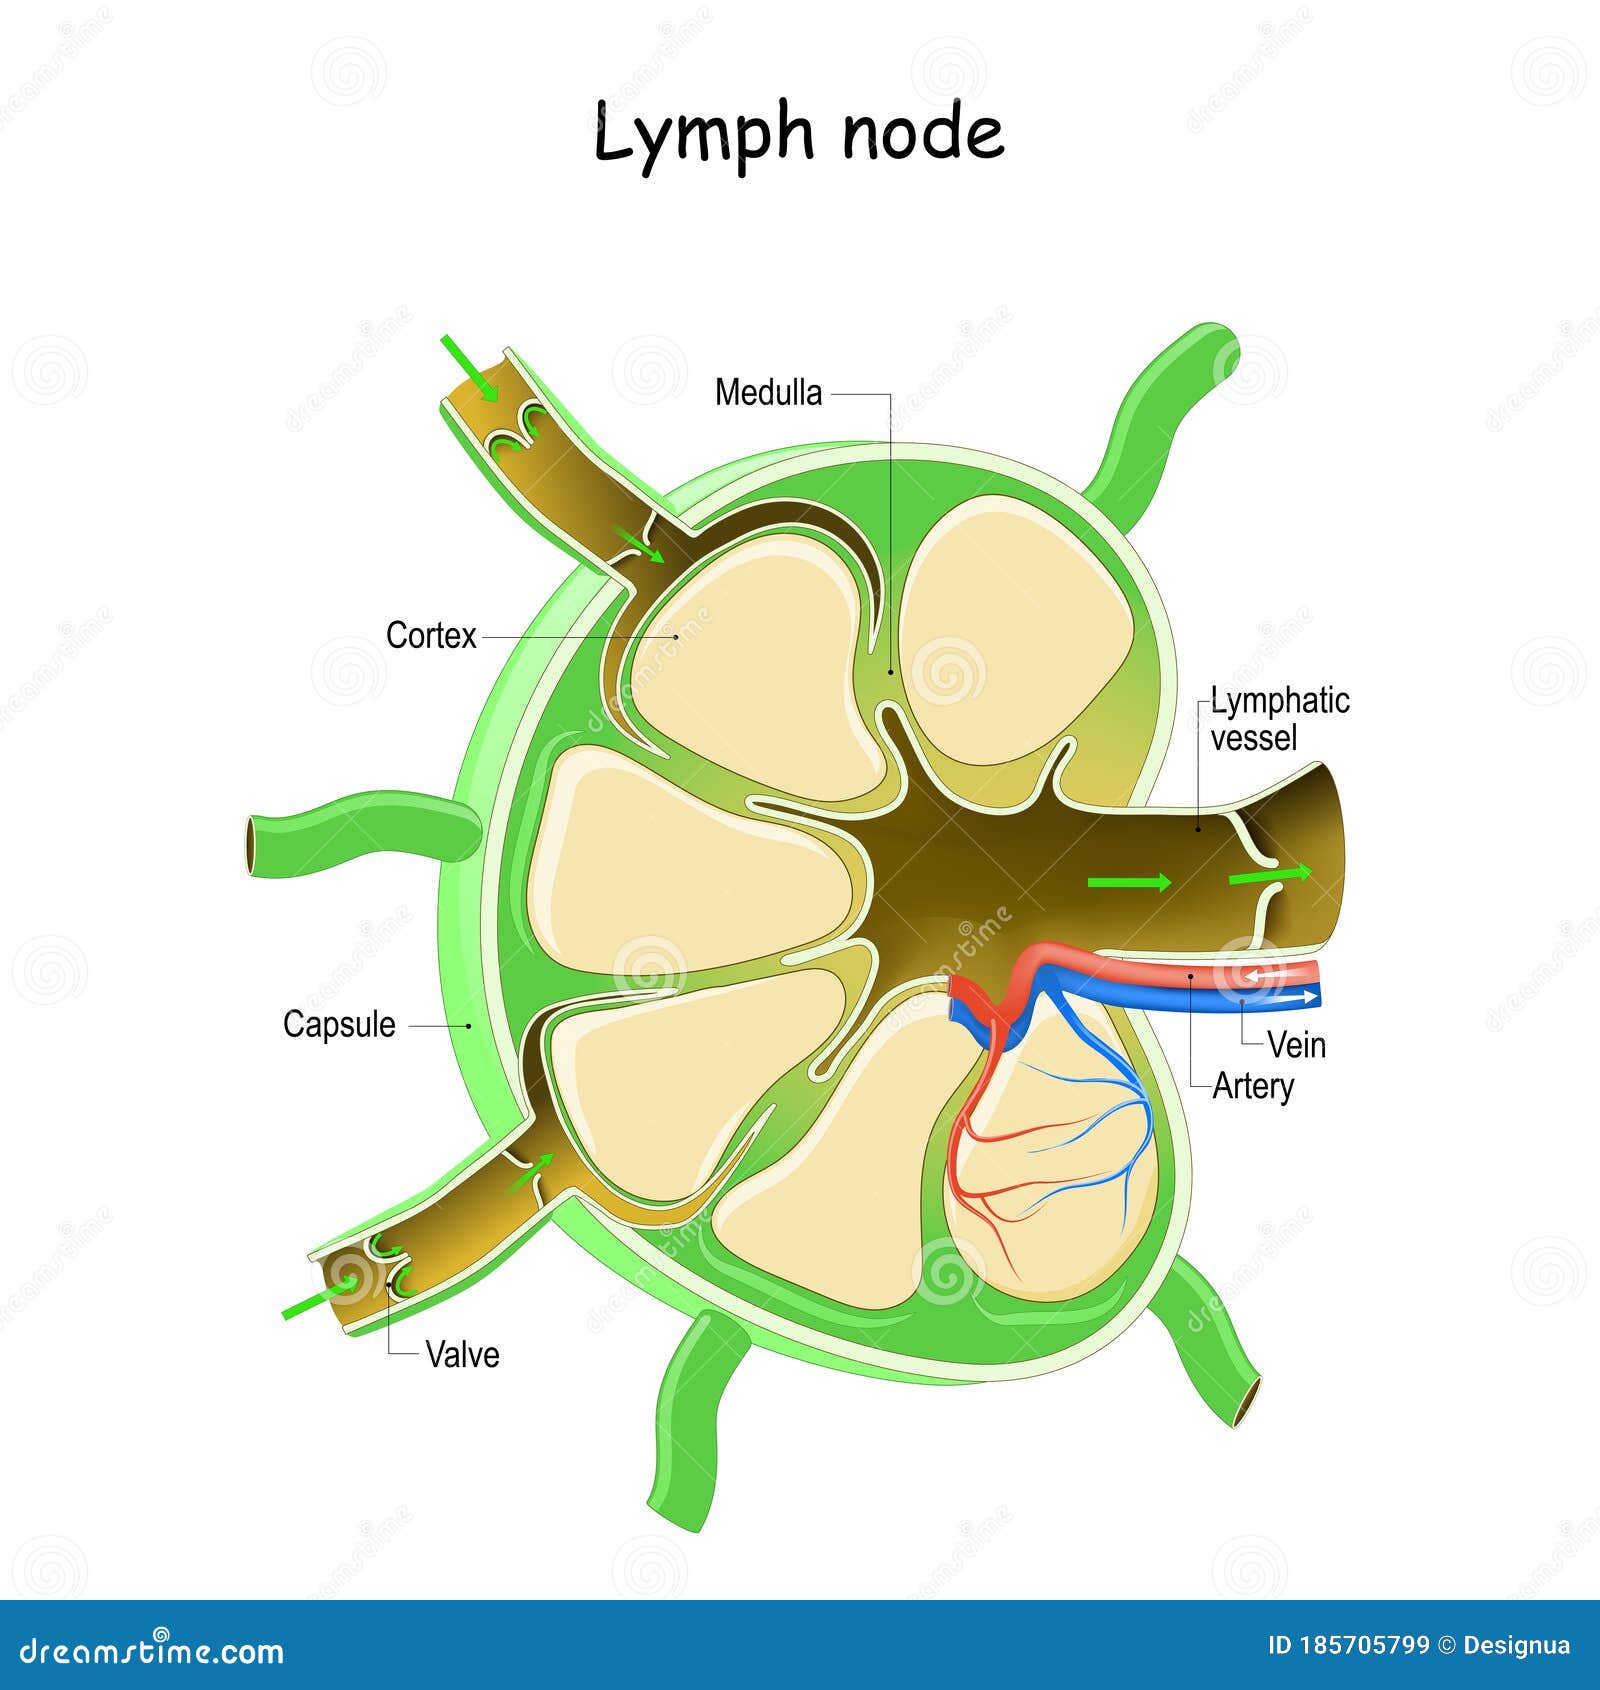 lymph node anatomy